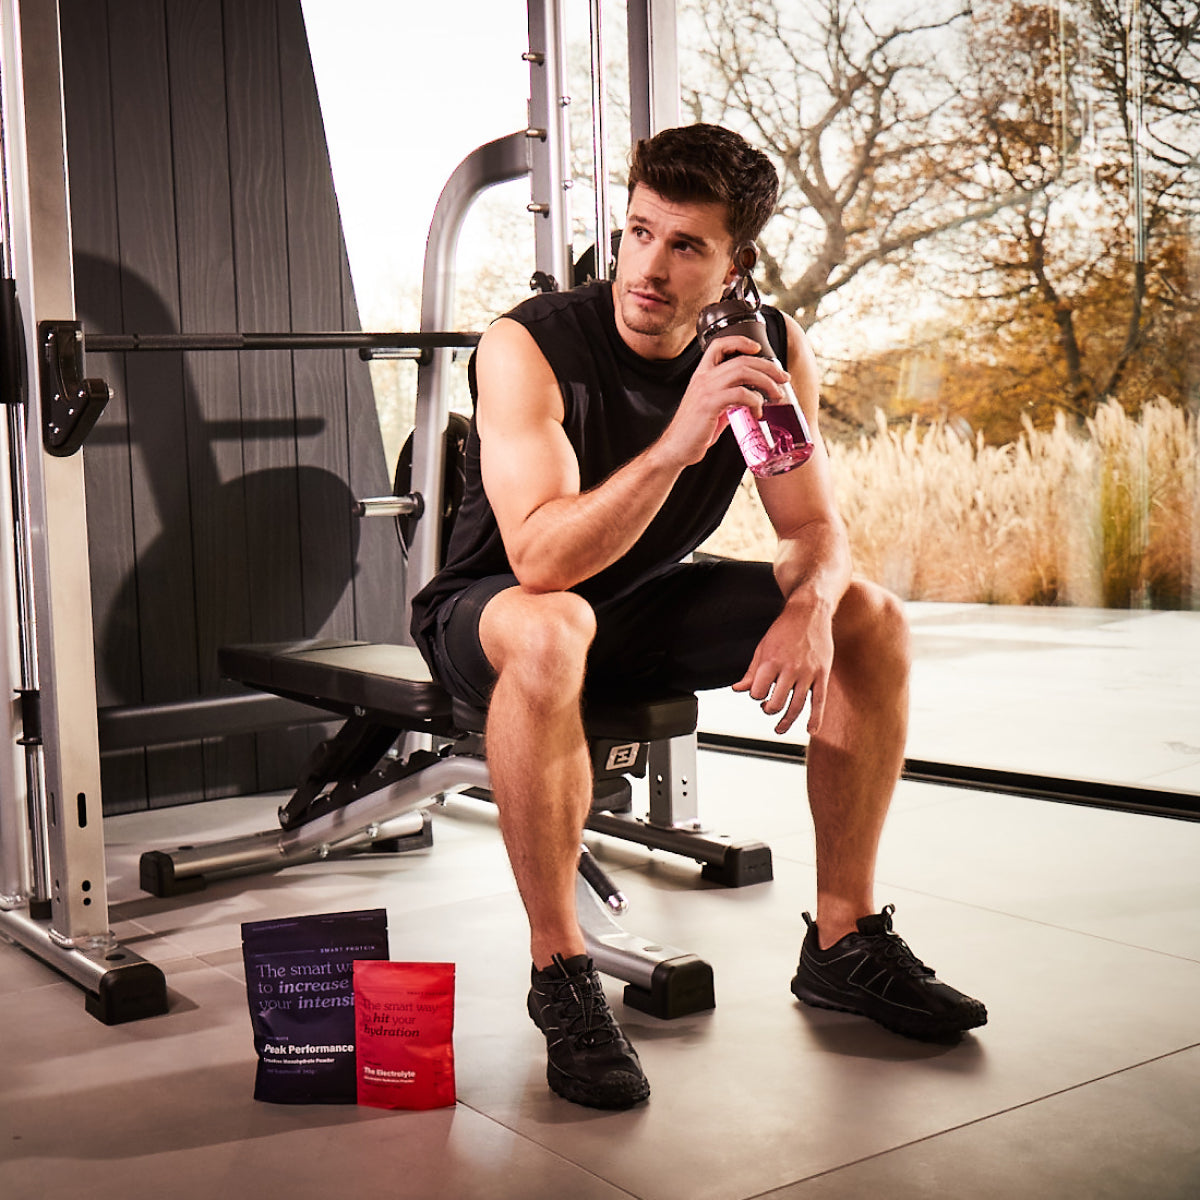 Electrolyte Hydration Powder Next To Man On Gym Bench